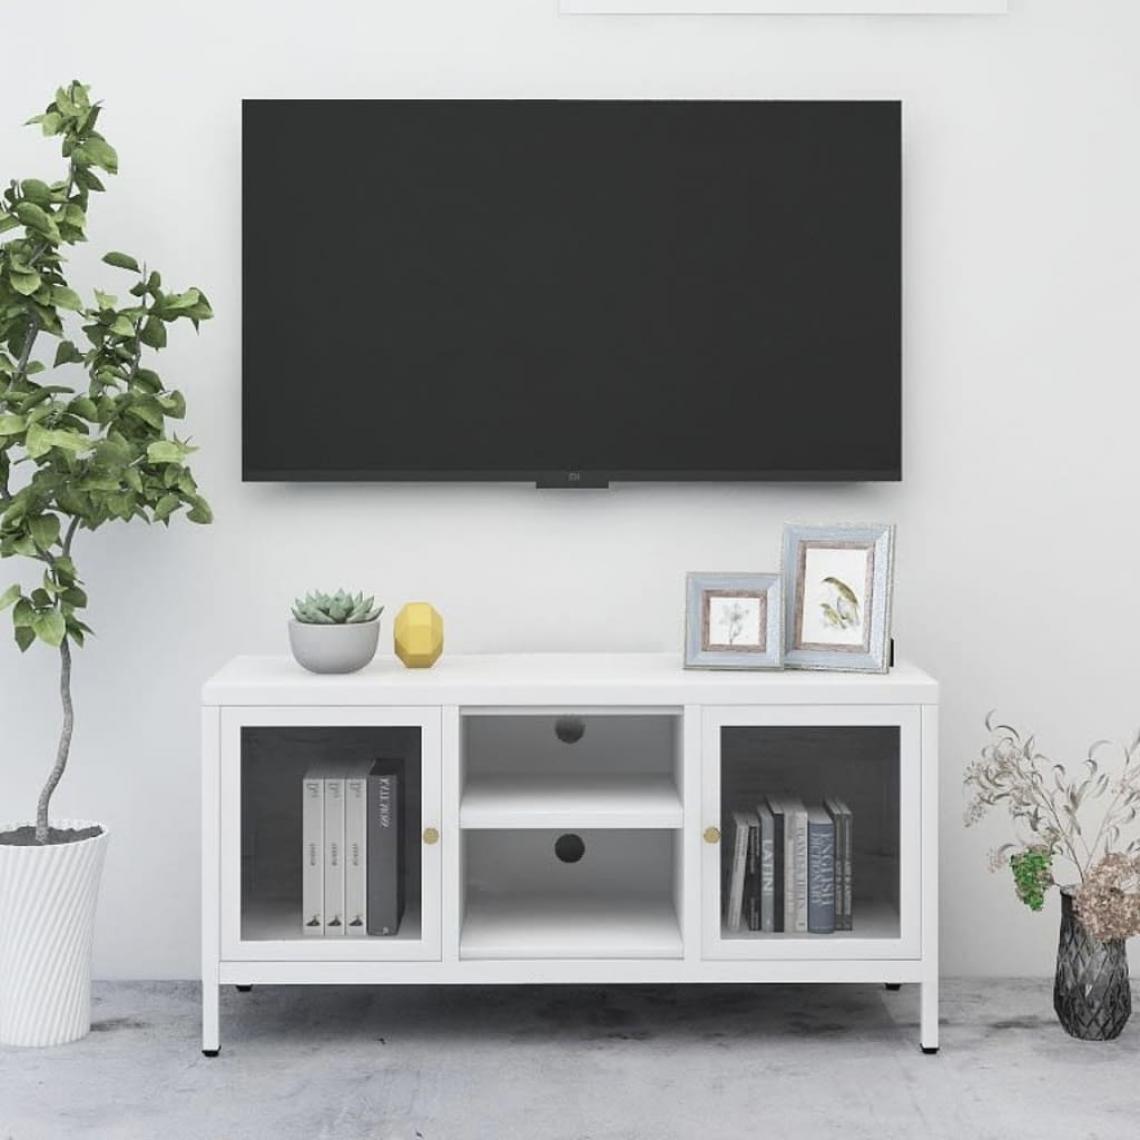 Vidaxl - vidaXL Meuble TV Blanc 105x35x52 cm Acier et verre - Meubles TV, Hi-Fi